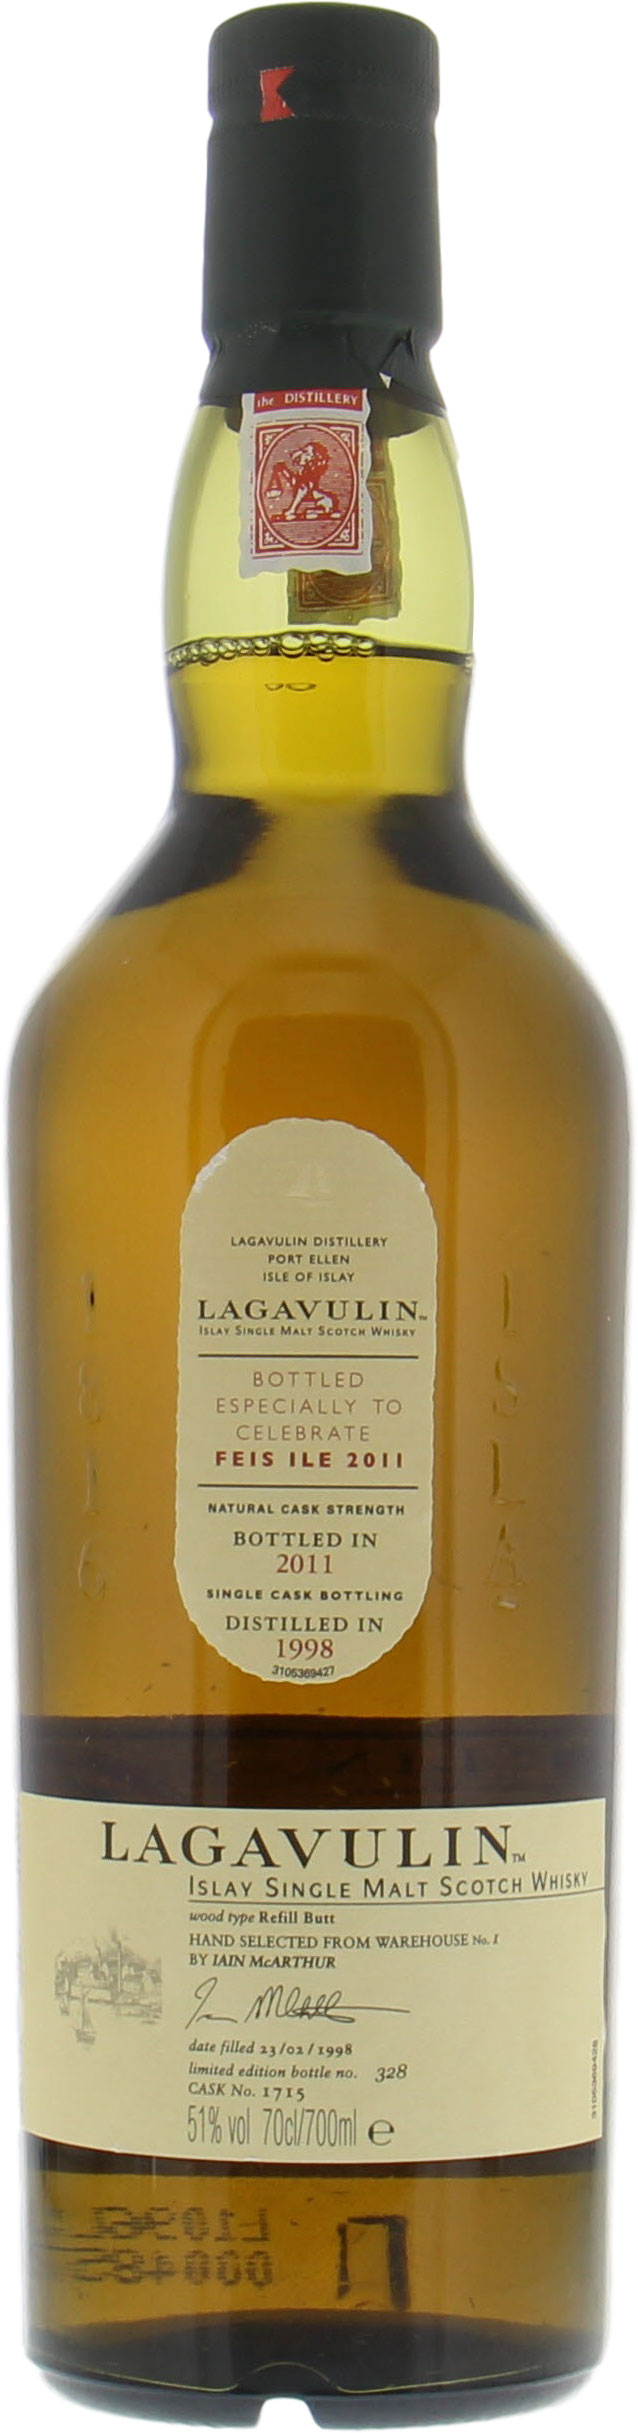 Lagavulin - Feis Ile 2011 13 Years Old  Cask 1715 51% 1998 10002